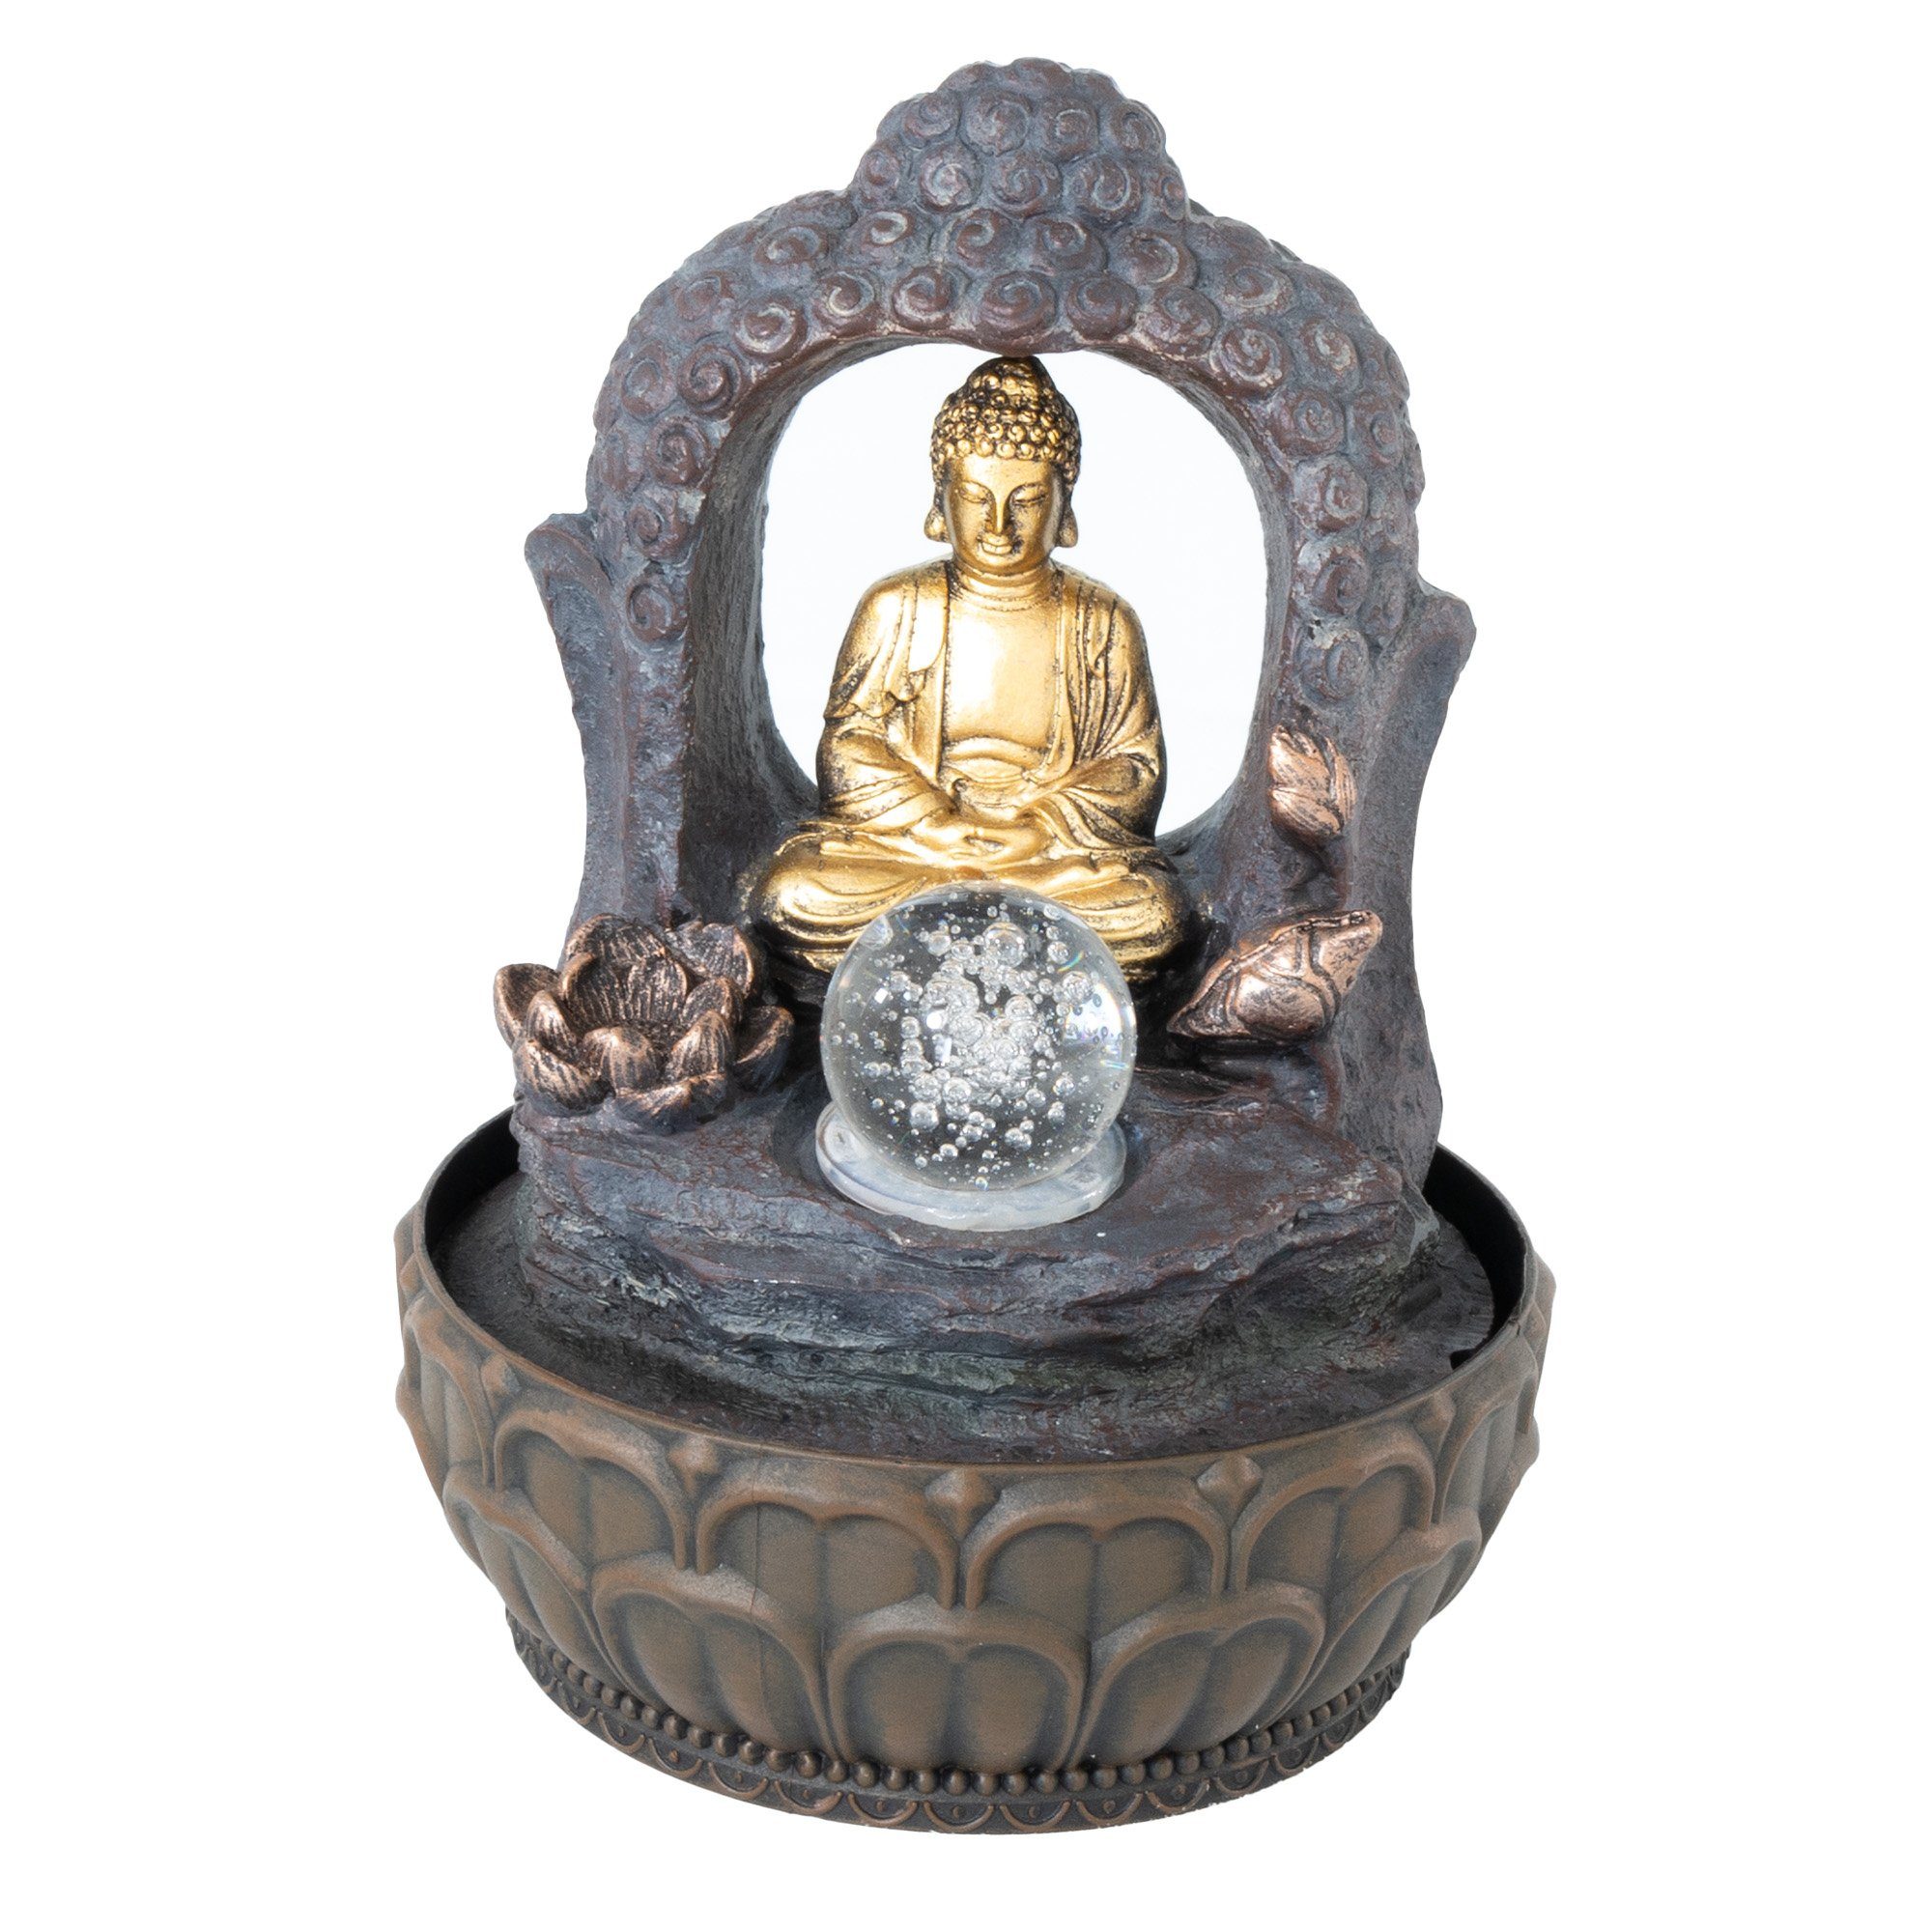 NATIV Zimmerbrunnen Tischbrunnen Buddha mit Beleuchtung, mit LED-Beleuchtung